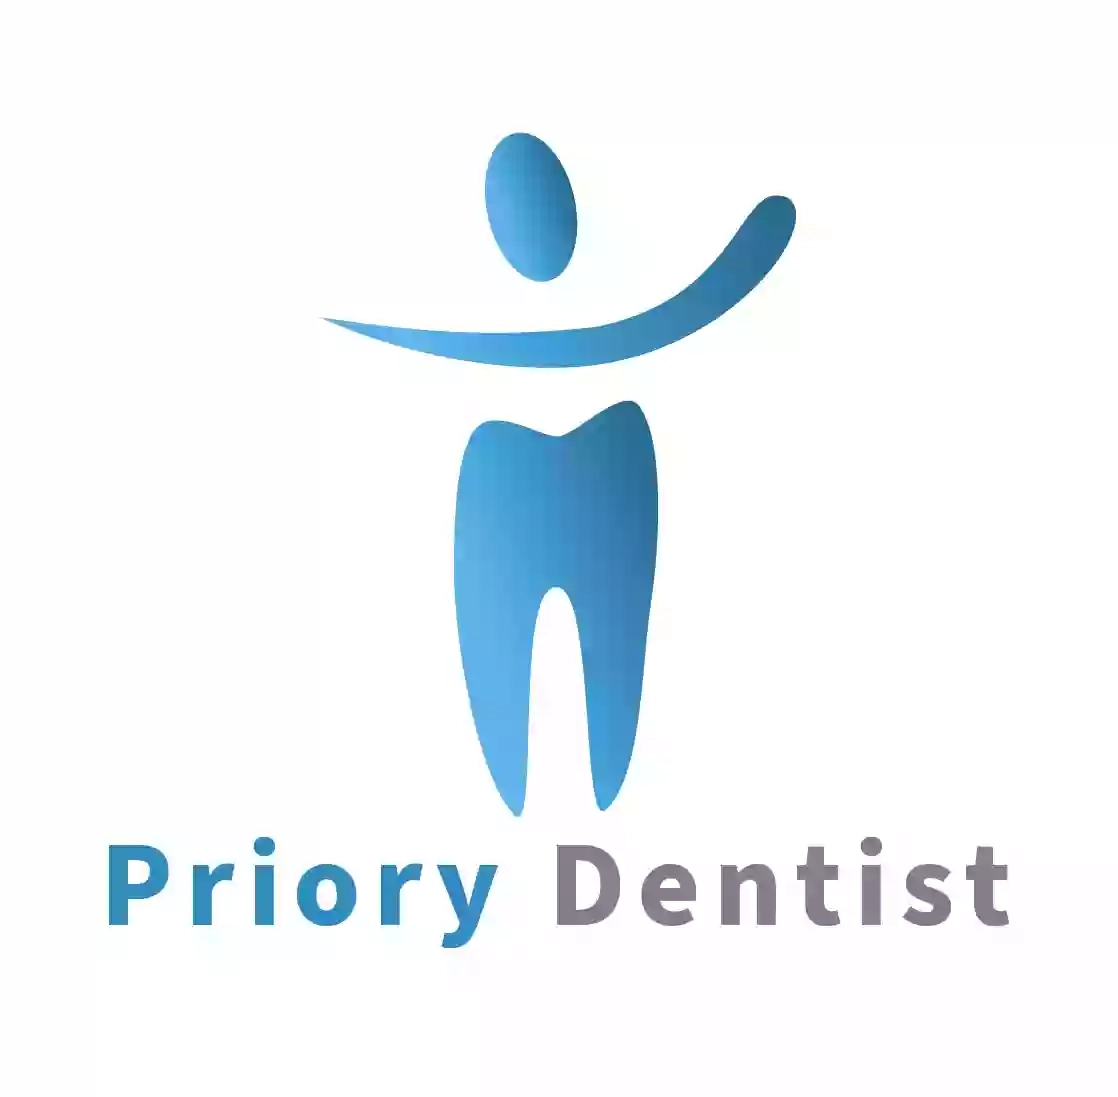 Priory Dentists